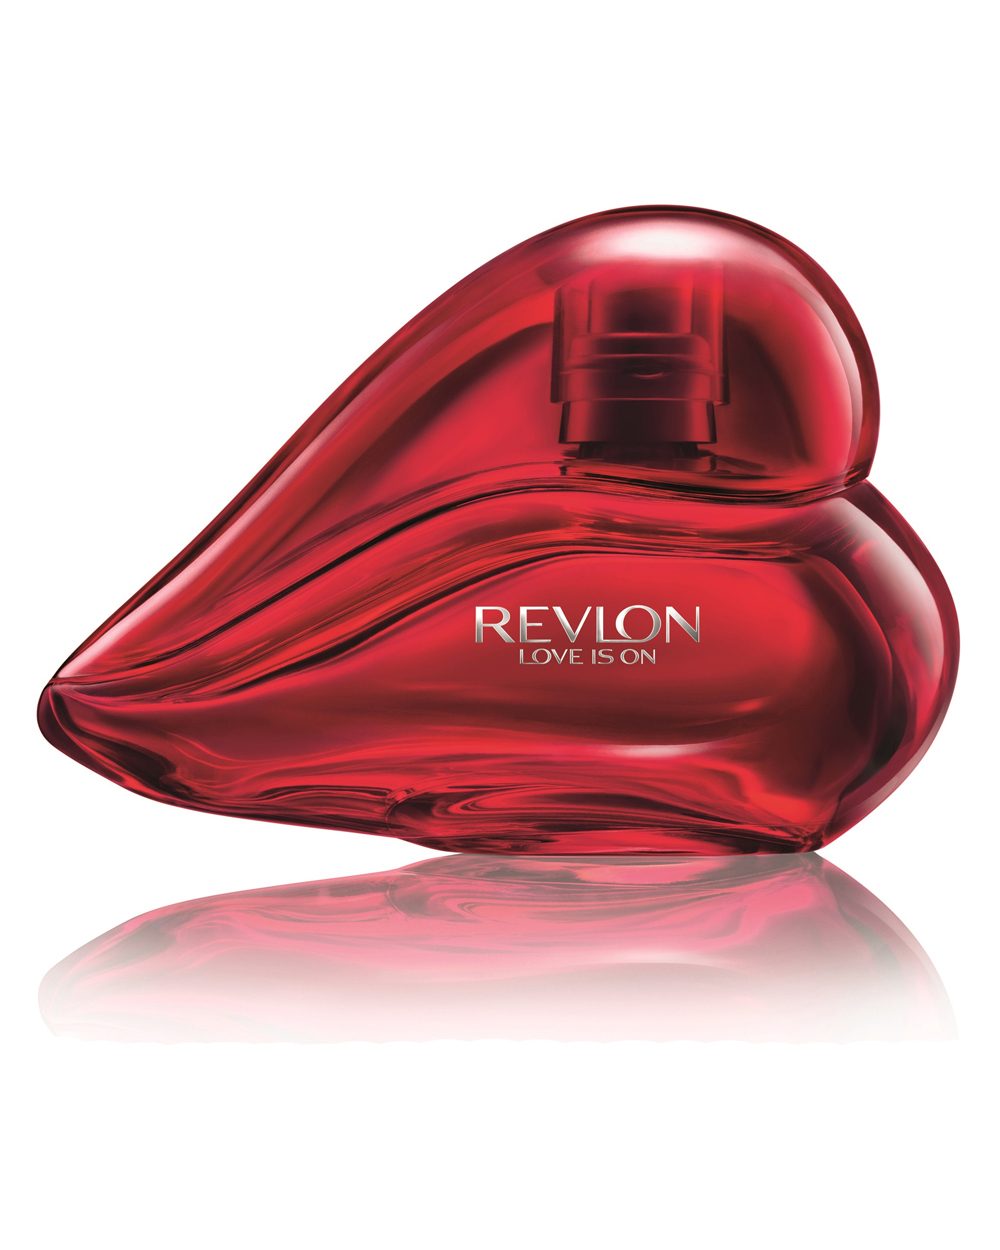 Revlon Love Is On EDT 50ml, $30.